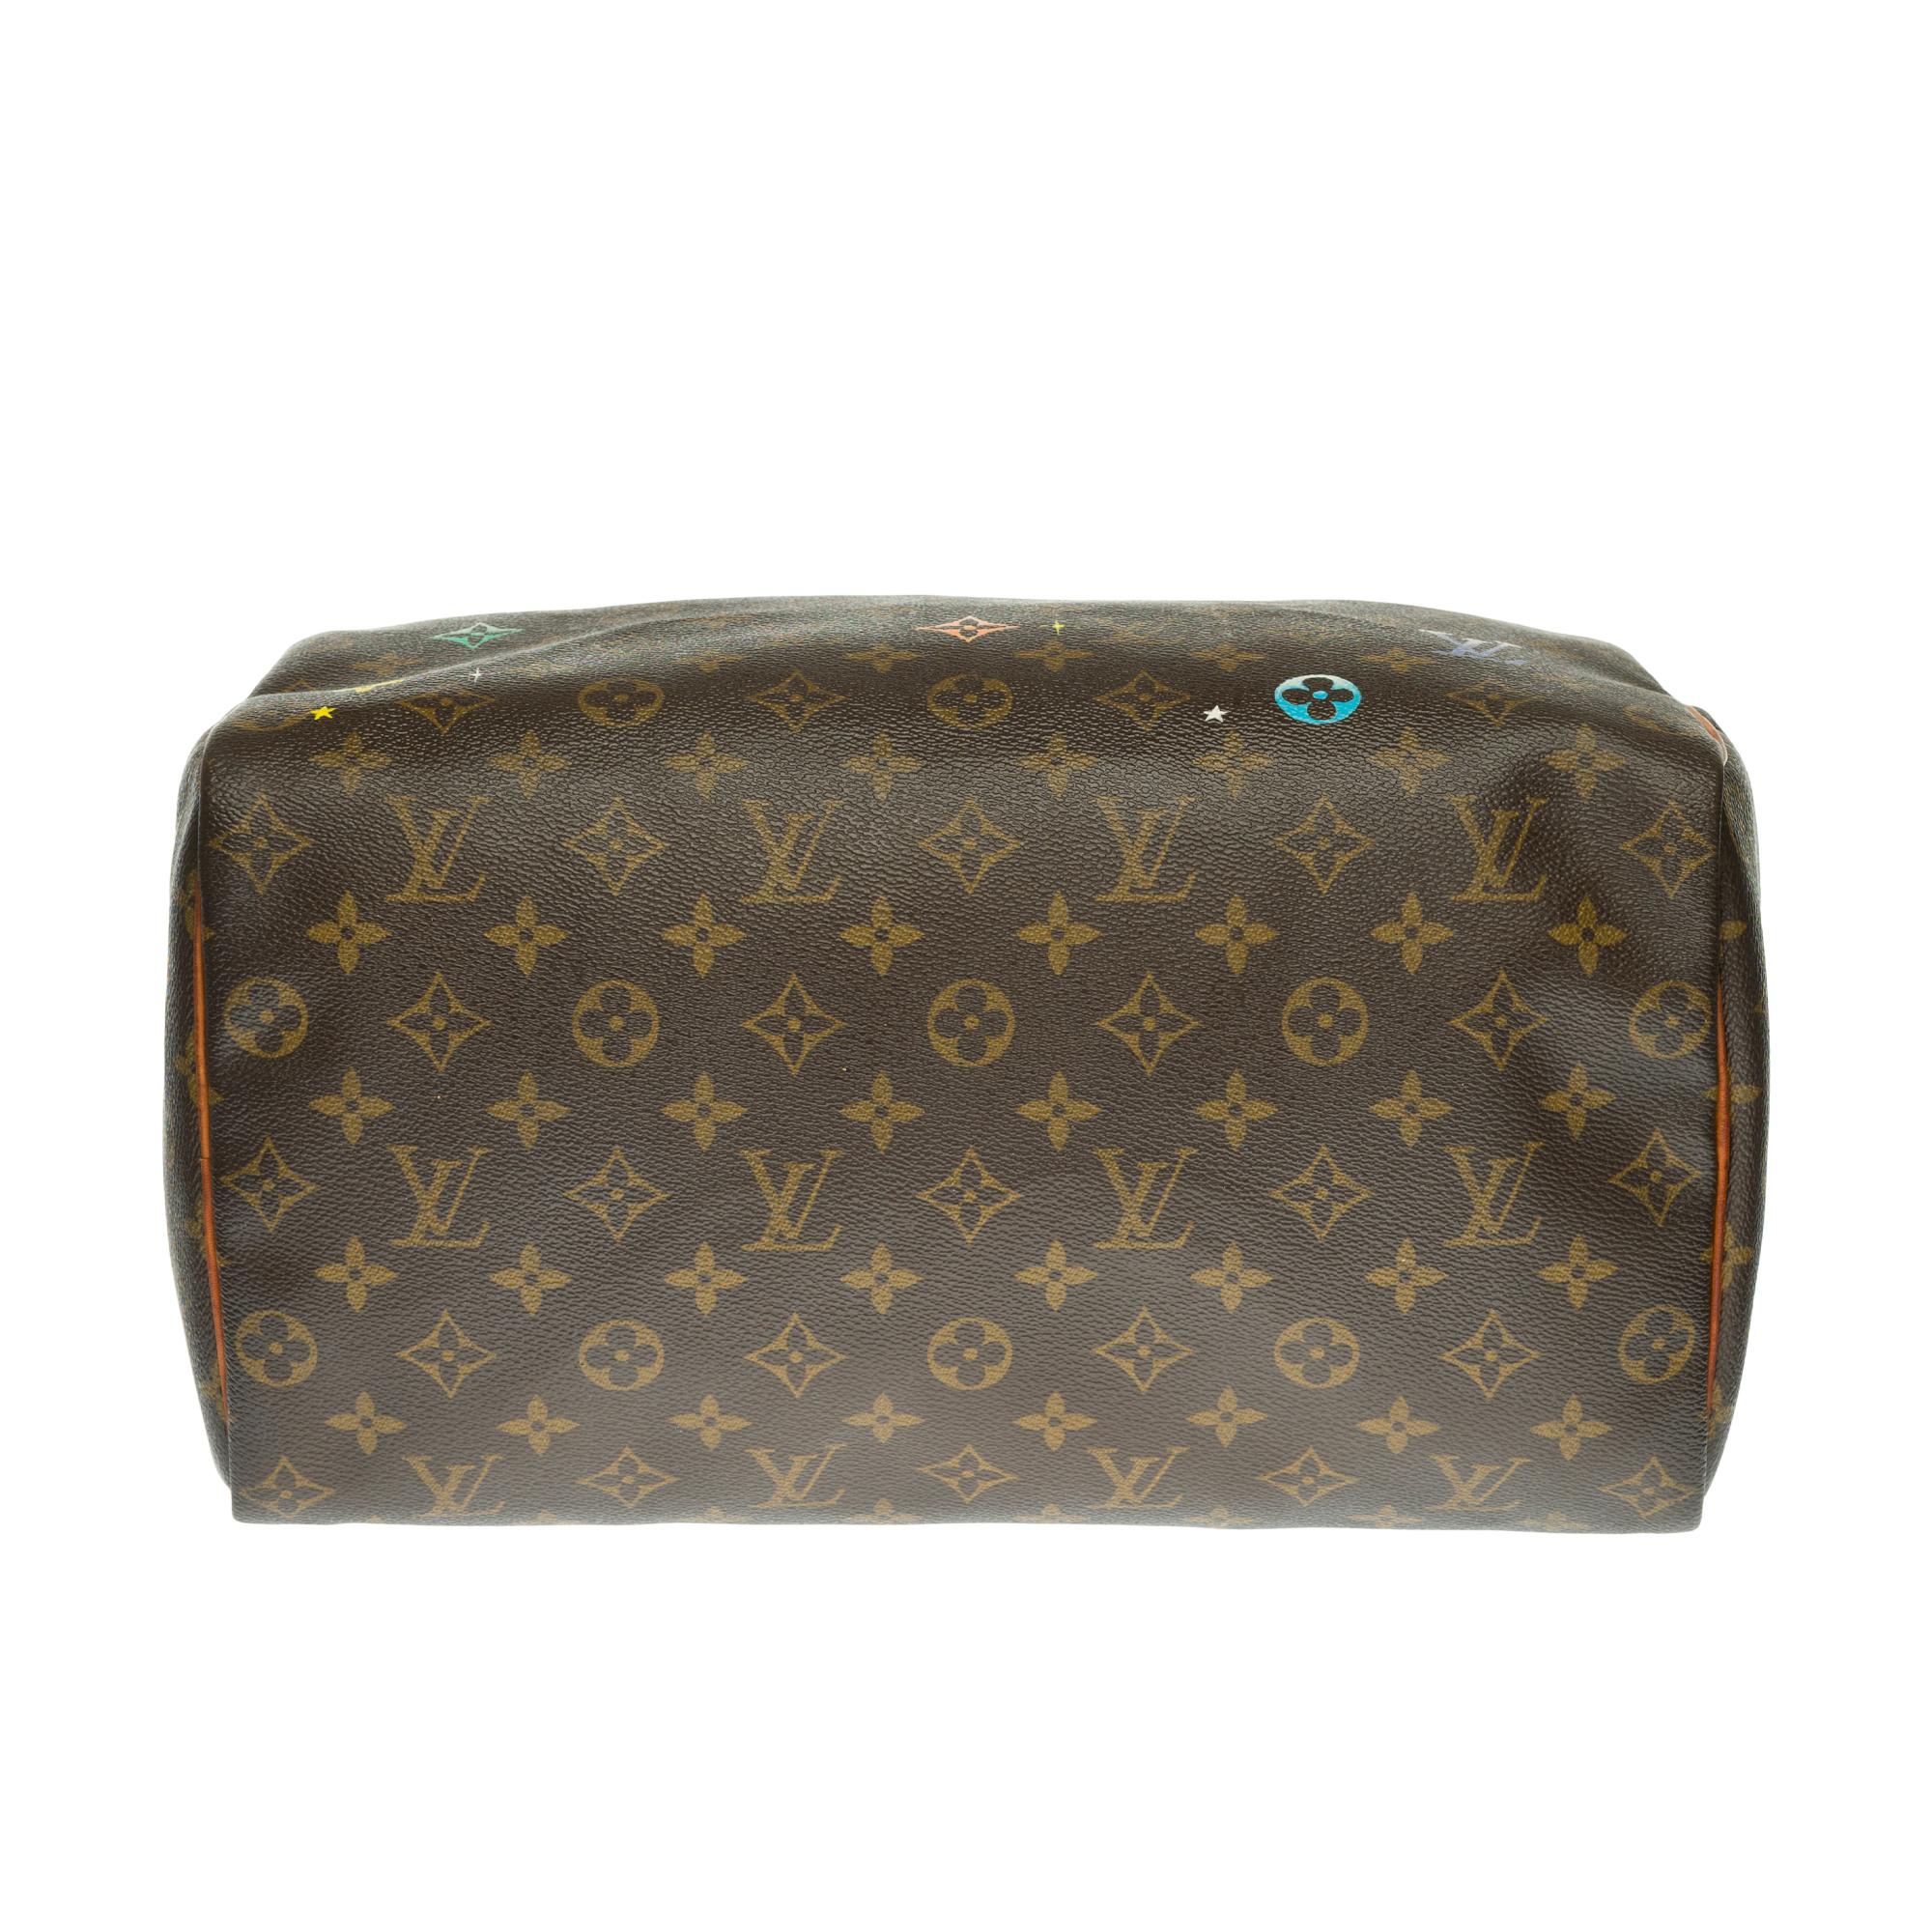 Customized Louis Vuitton Speedy 35 handbag in Monogram canvas 4